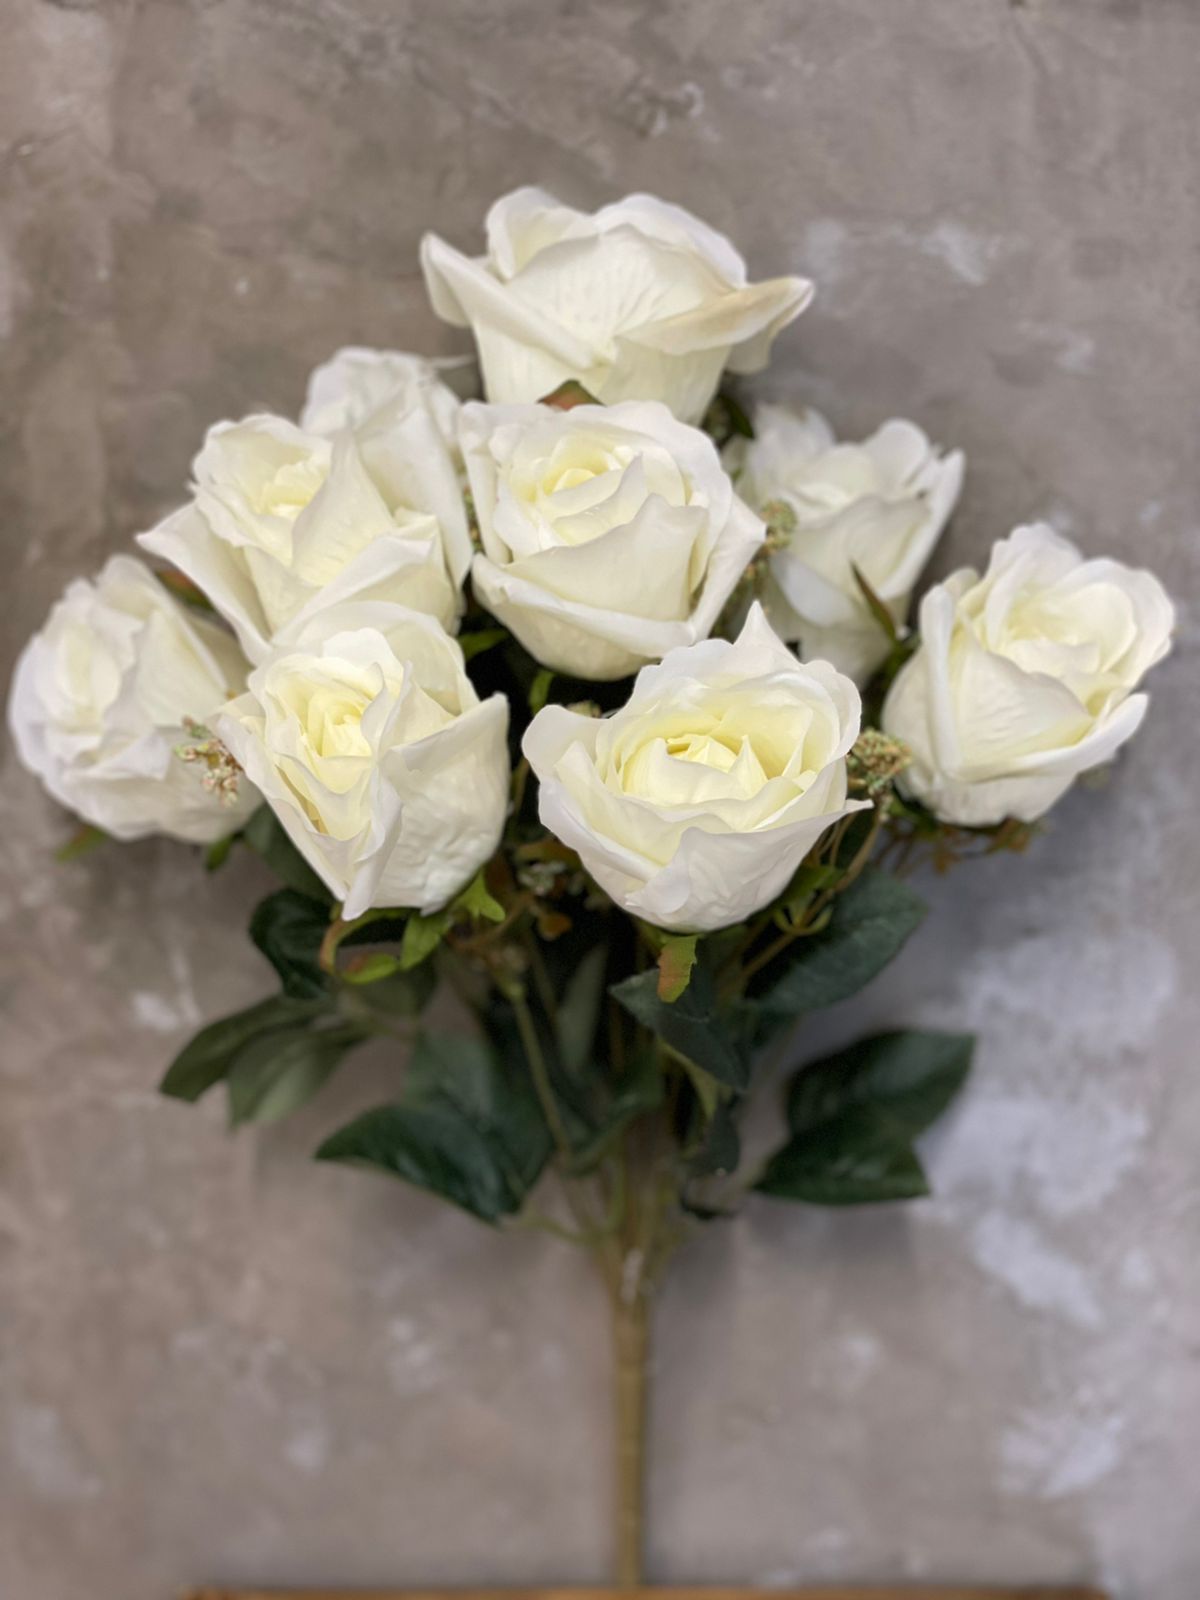 Buquê de Rosas - Branco de 44cm